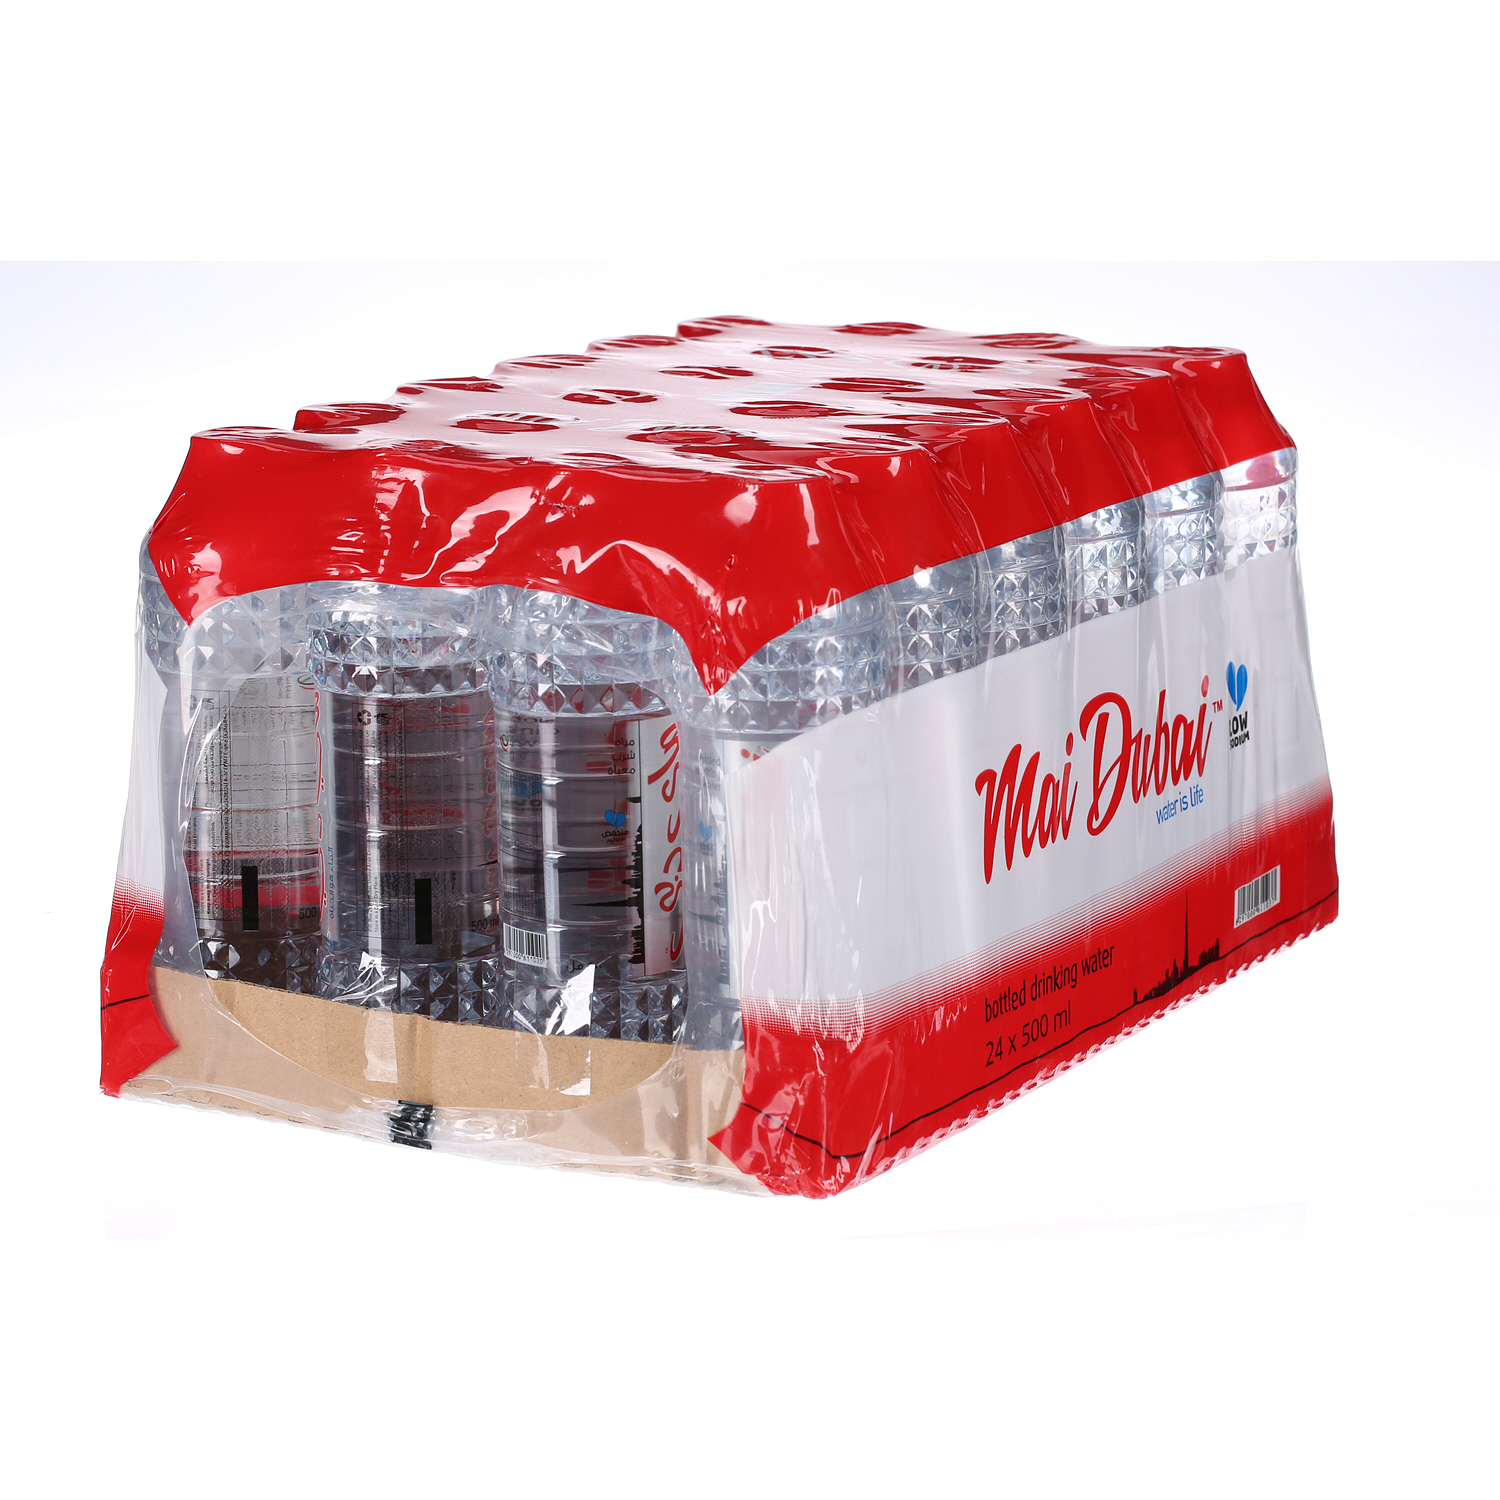 Mai Dubai Drinking Water Bottle 500 ml × 24 Pack